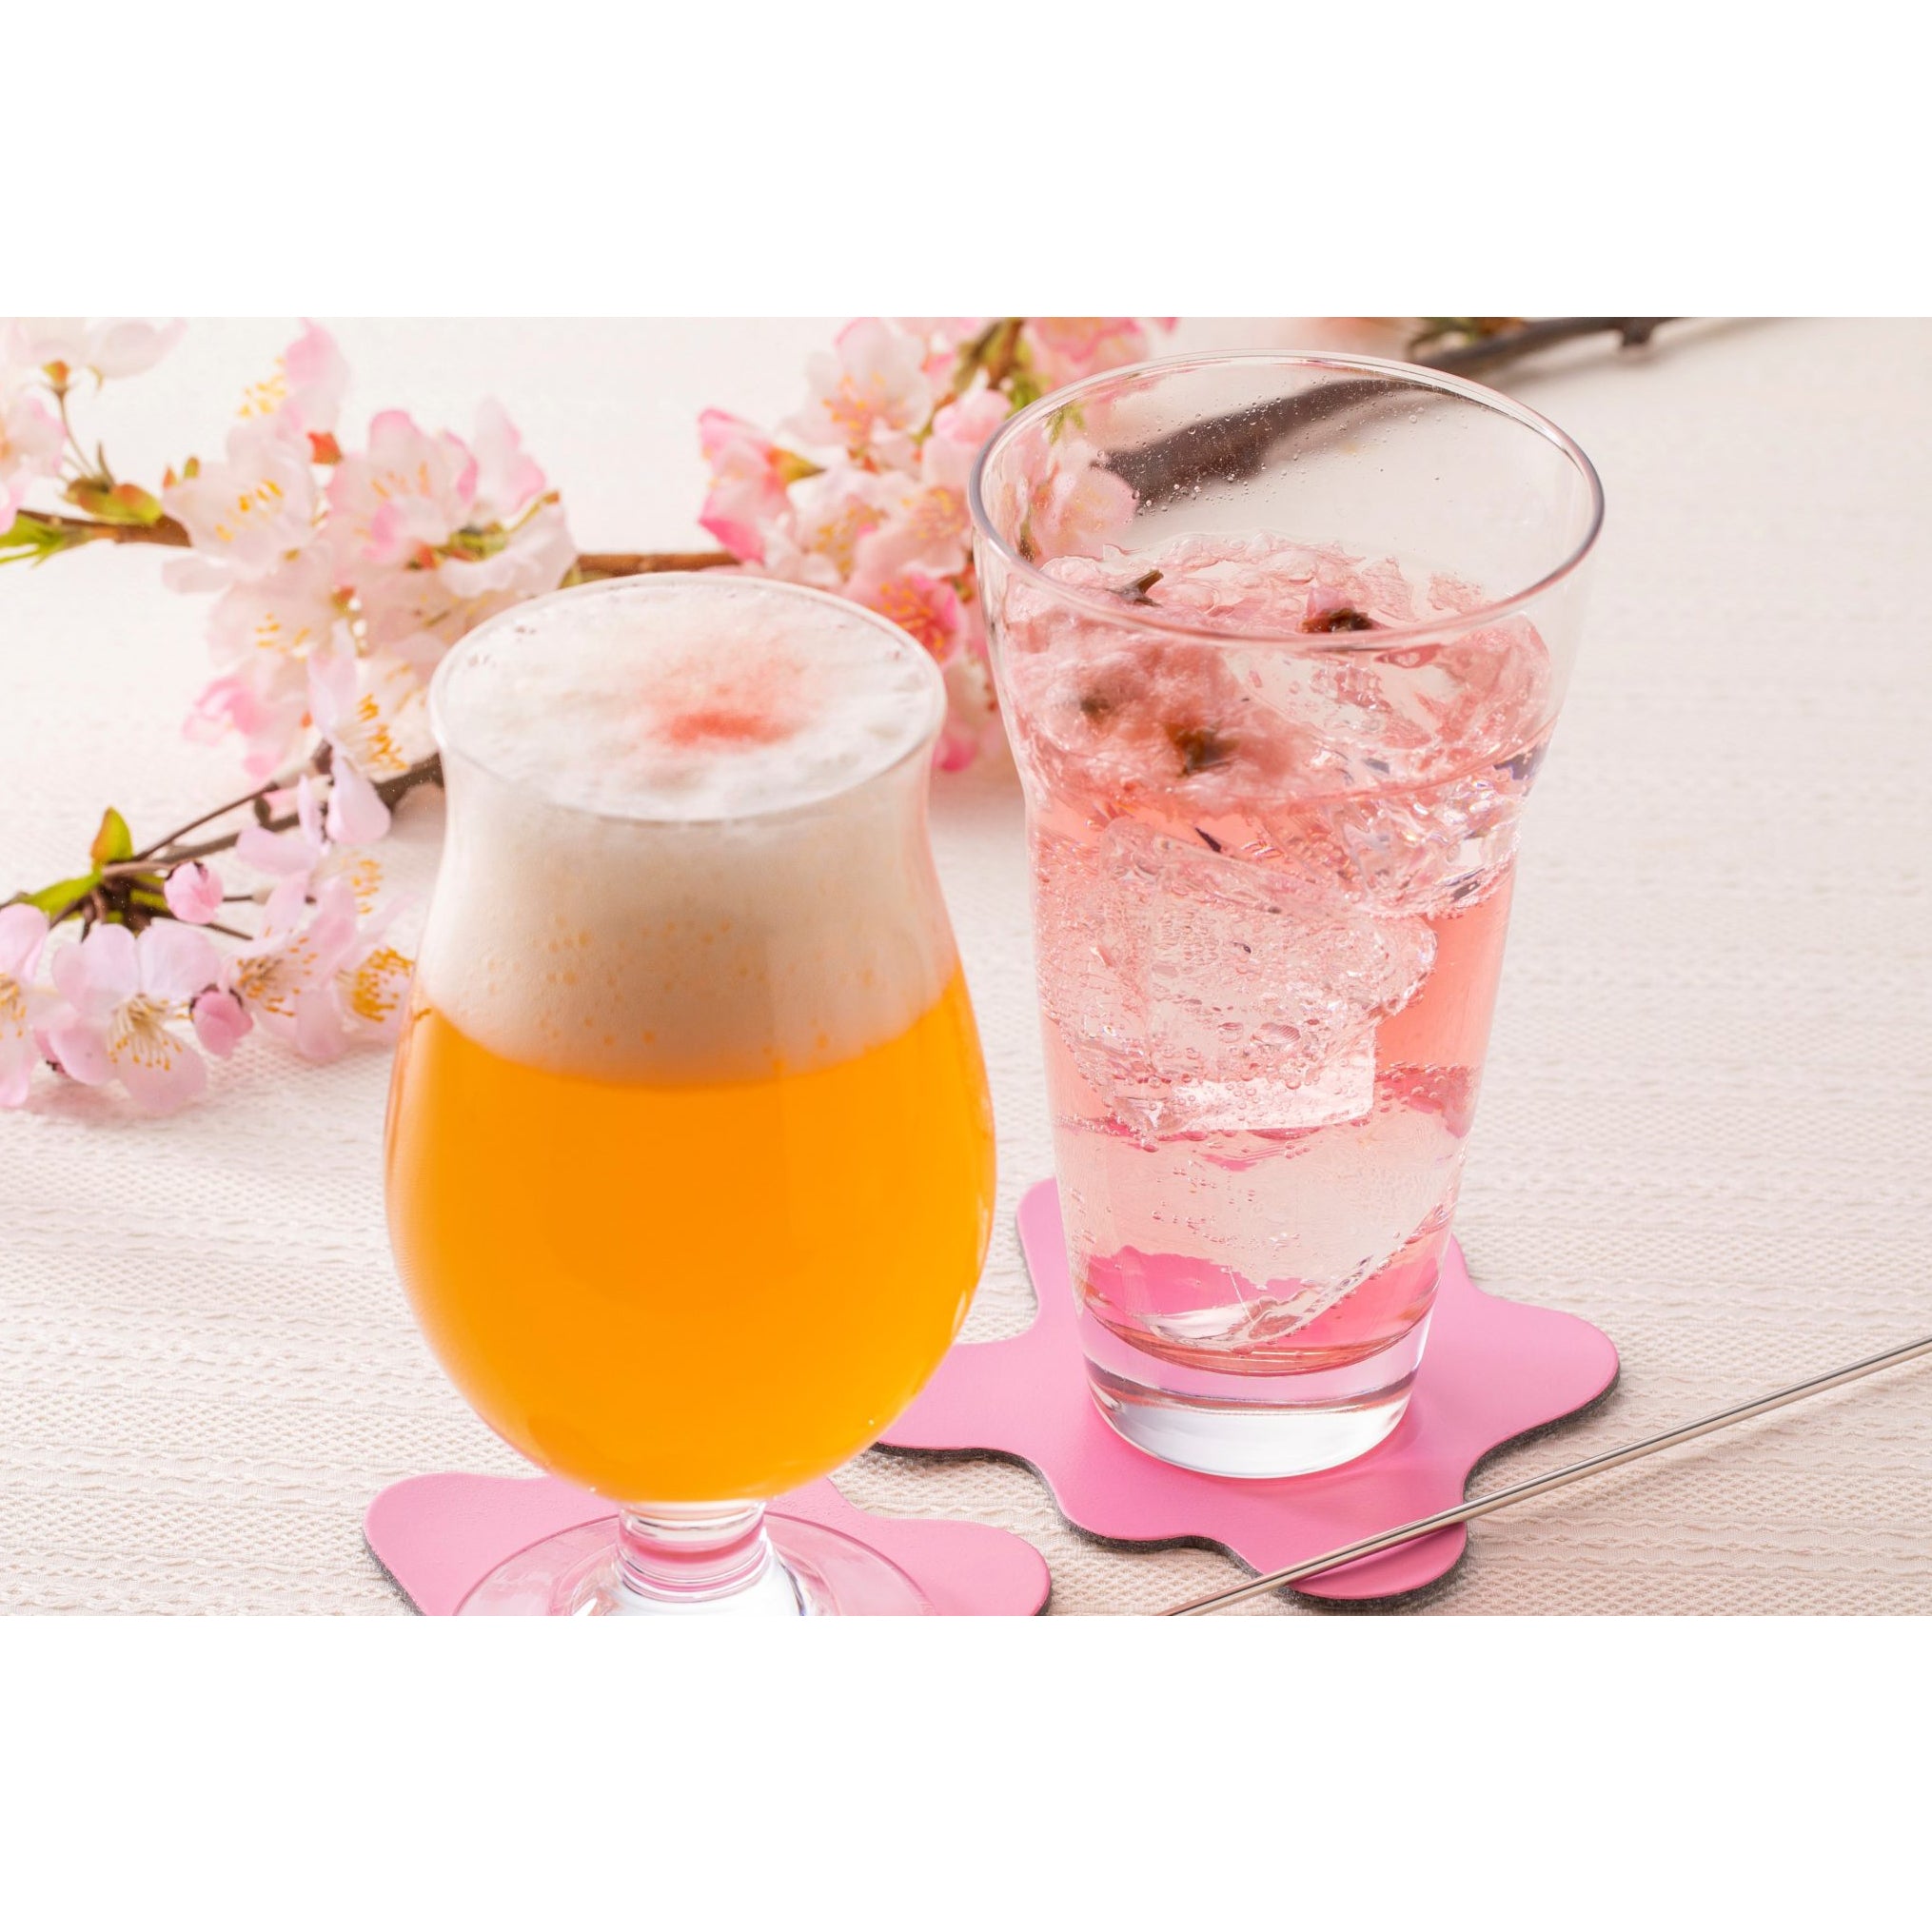 GUSTA SUPPLIES Cherry Blossom Flowers (Sakura), Preserved in Salt